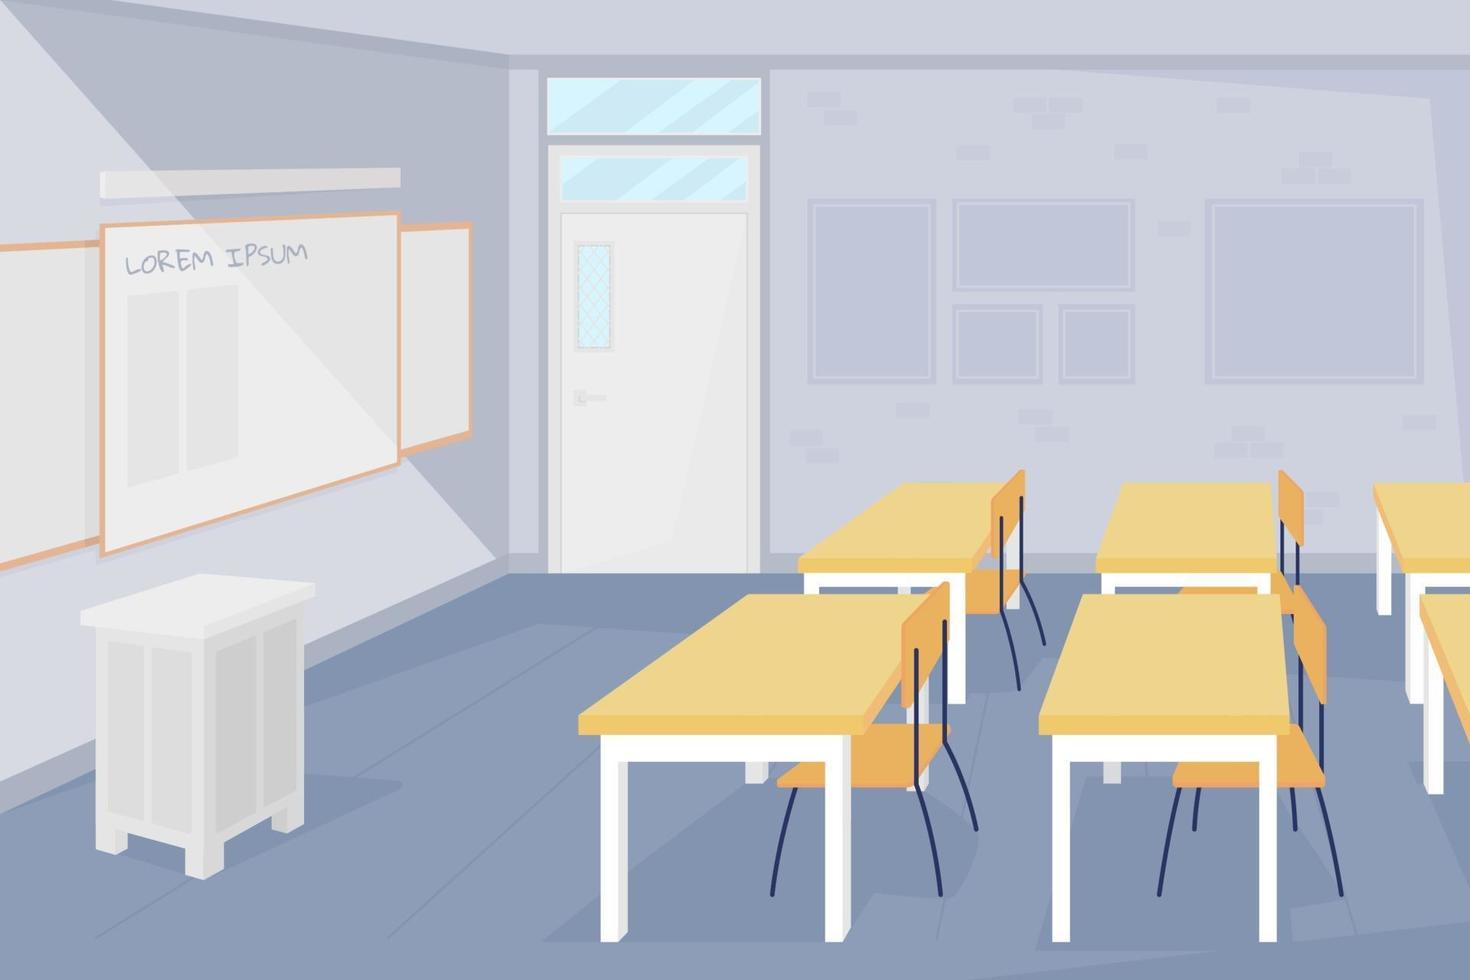 Nobody at school classroom flat color vector illustration